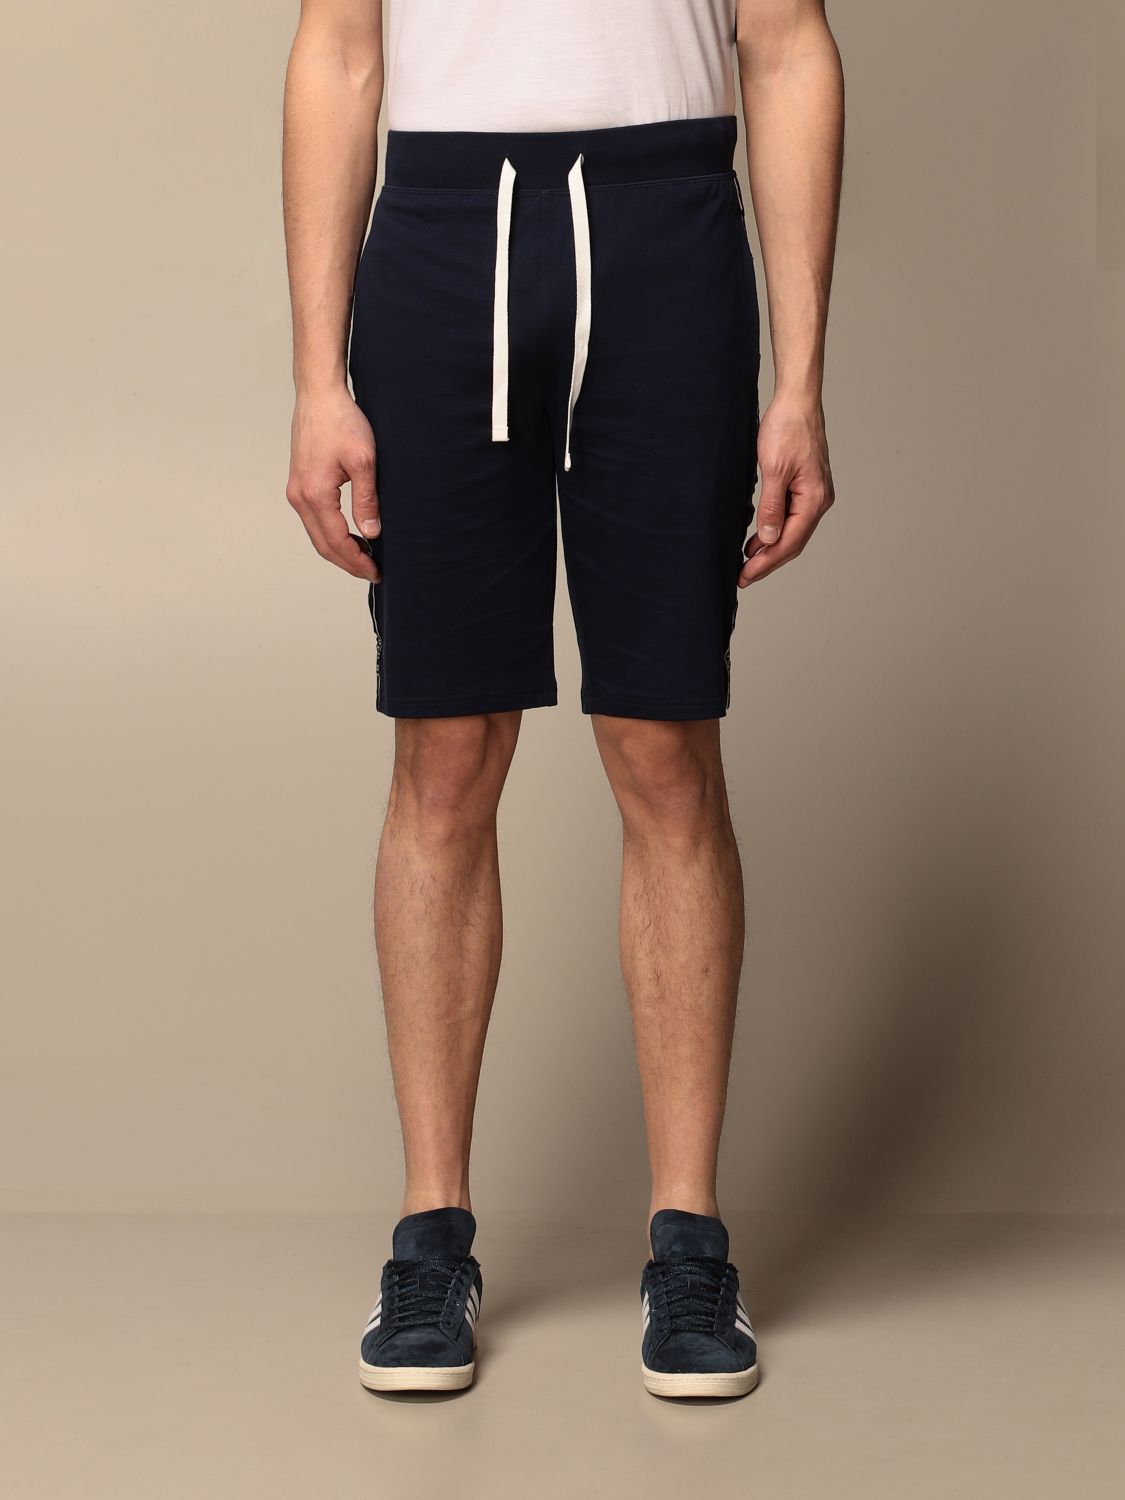 Pantalones cortos Polo Ralph Lauren: Pantalones cortos hombre Polo Ralph Lauren azul marino 1